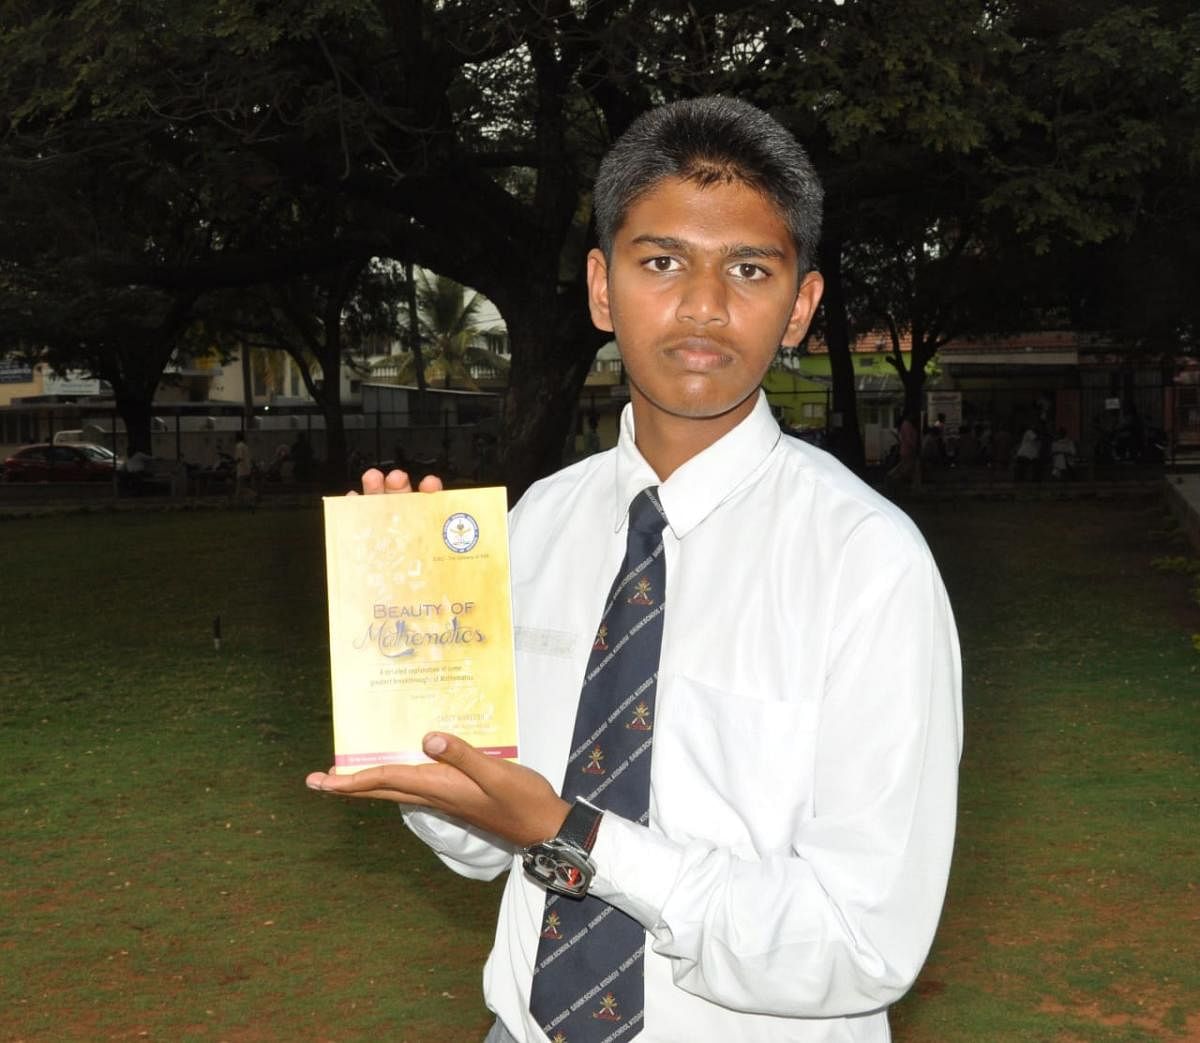 Sainik School student A Manish shows his book ‘Beauty of Mathematics’.